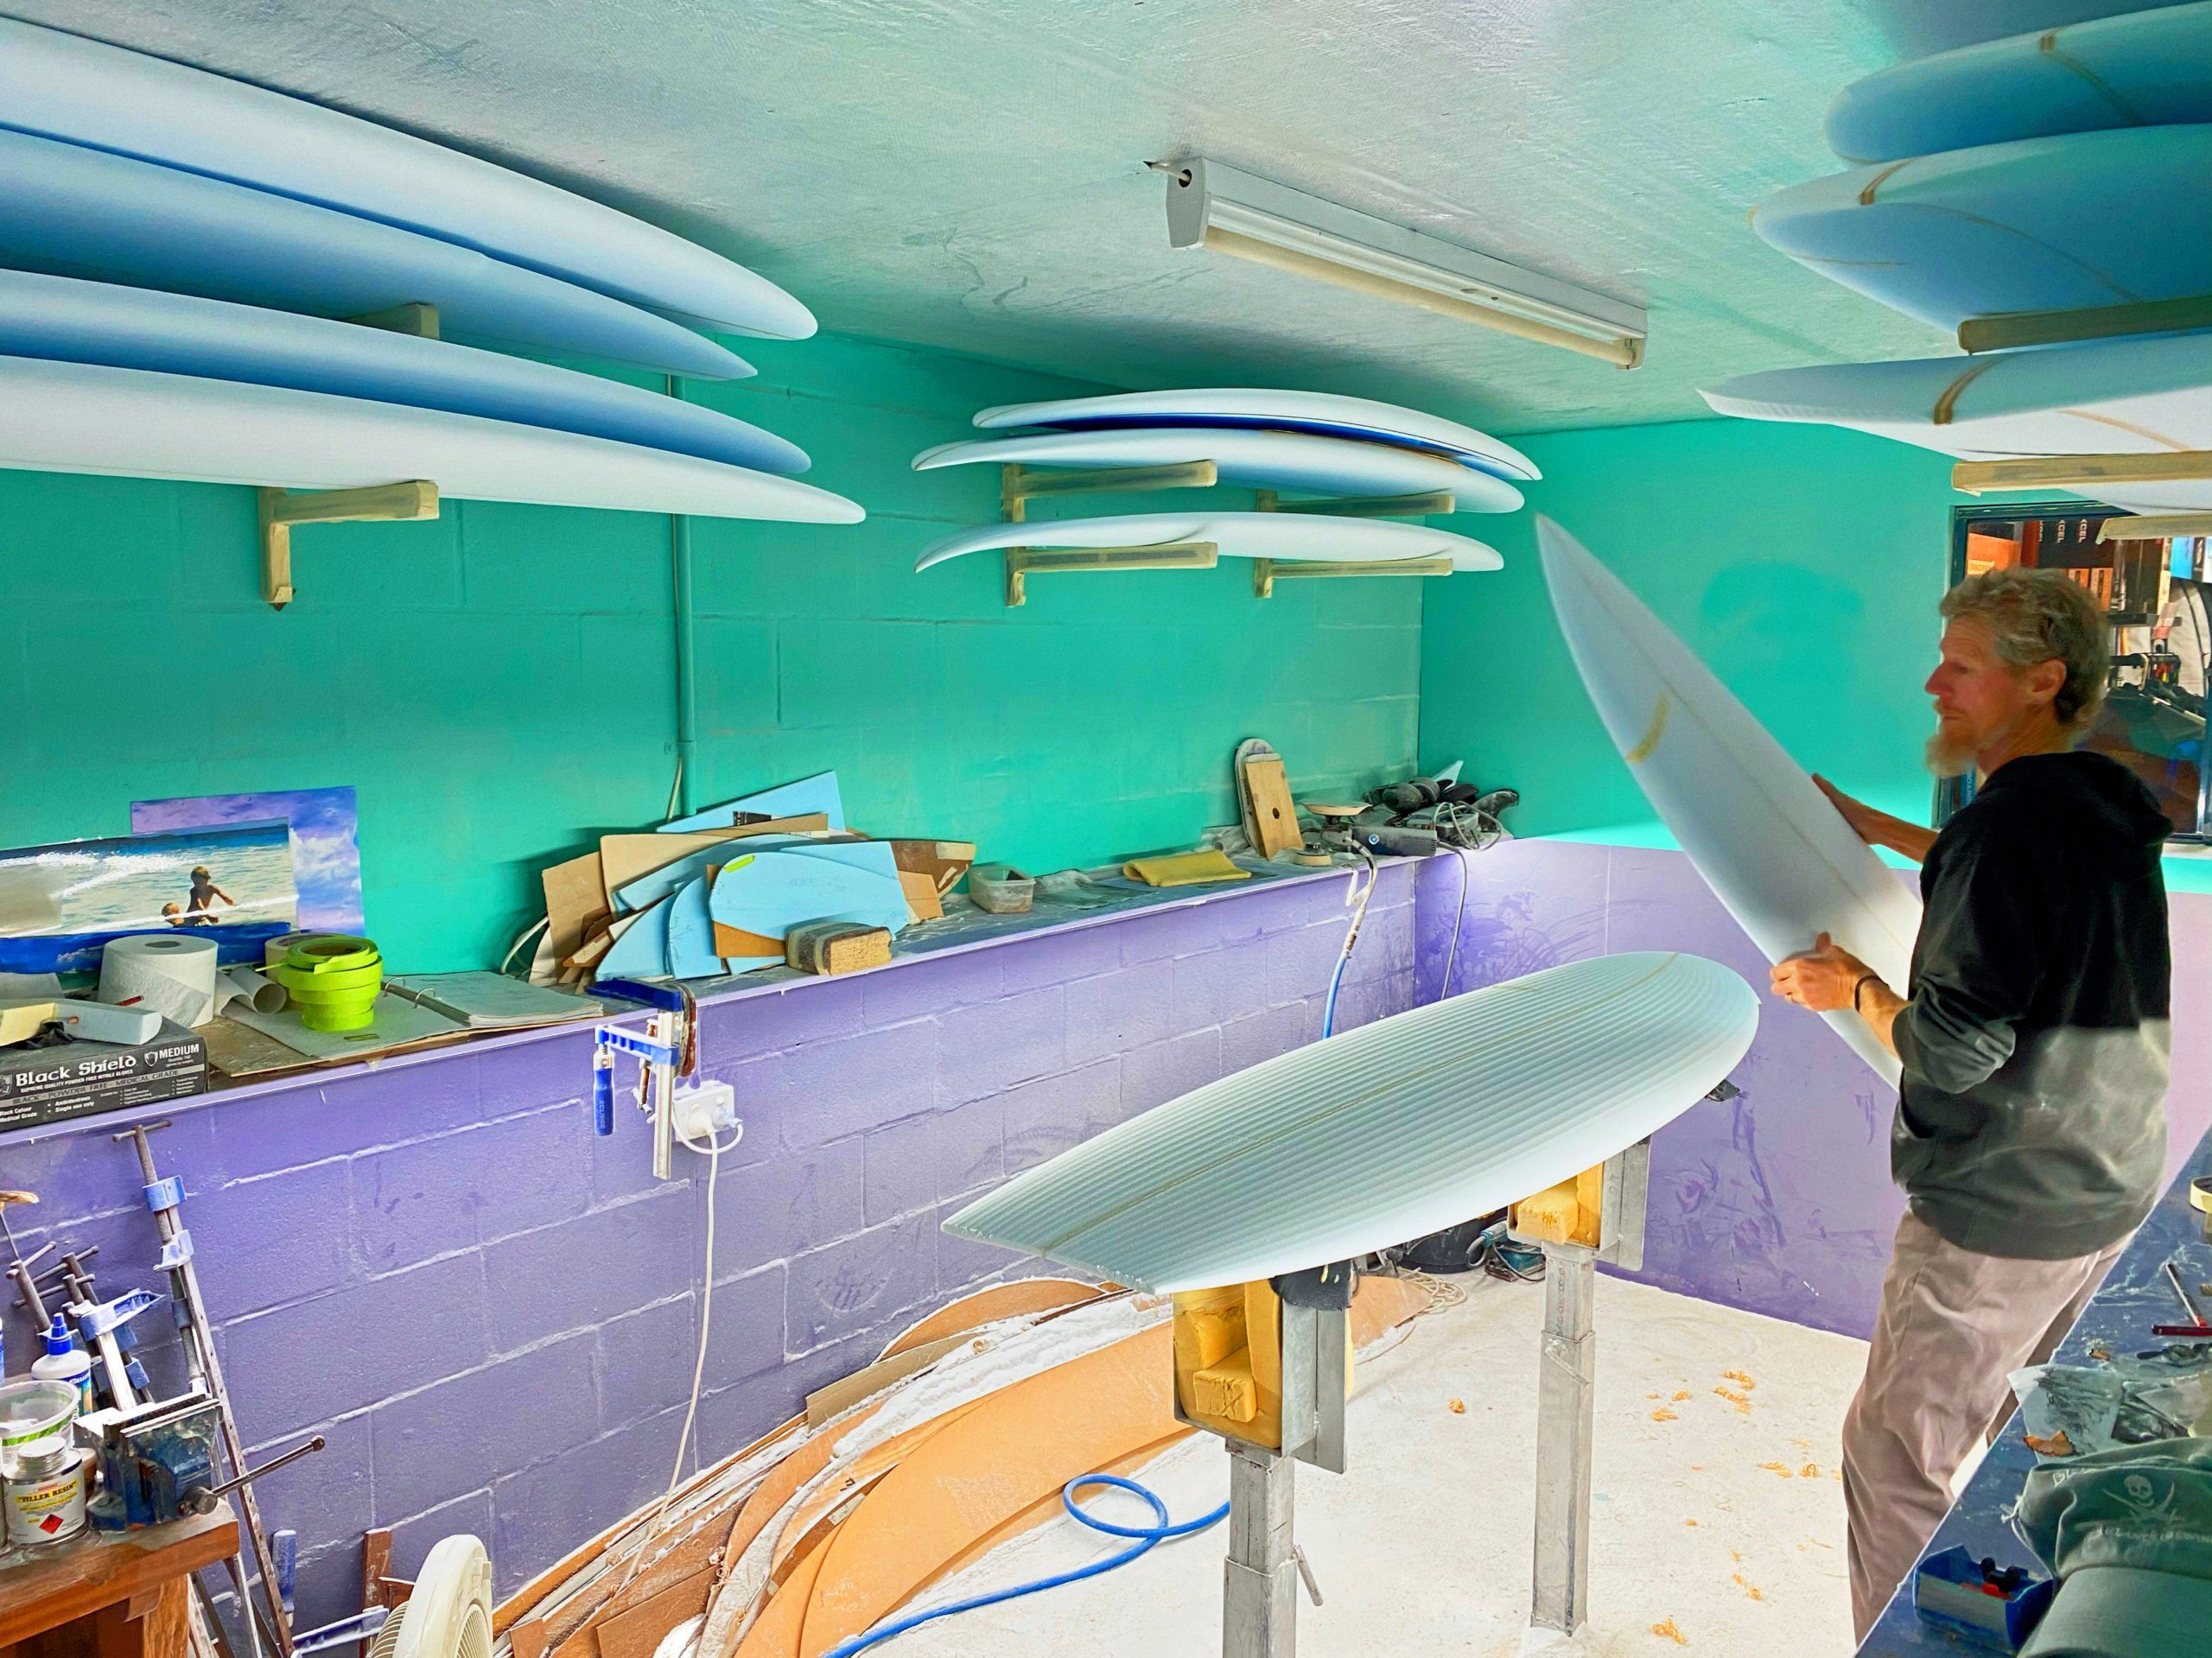 Mark 'Oggy' Ogram, in his Dunsborough surfboard shaping studio